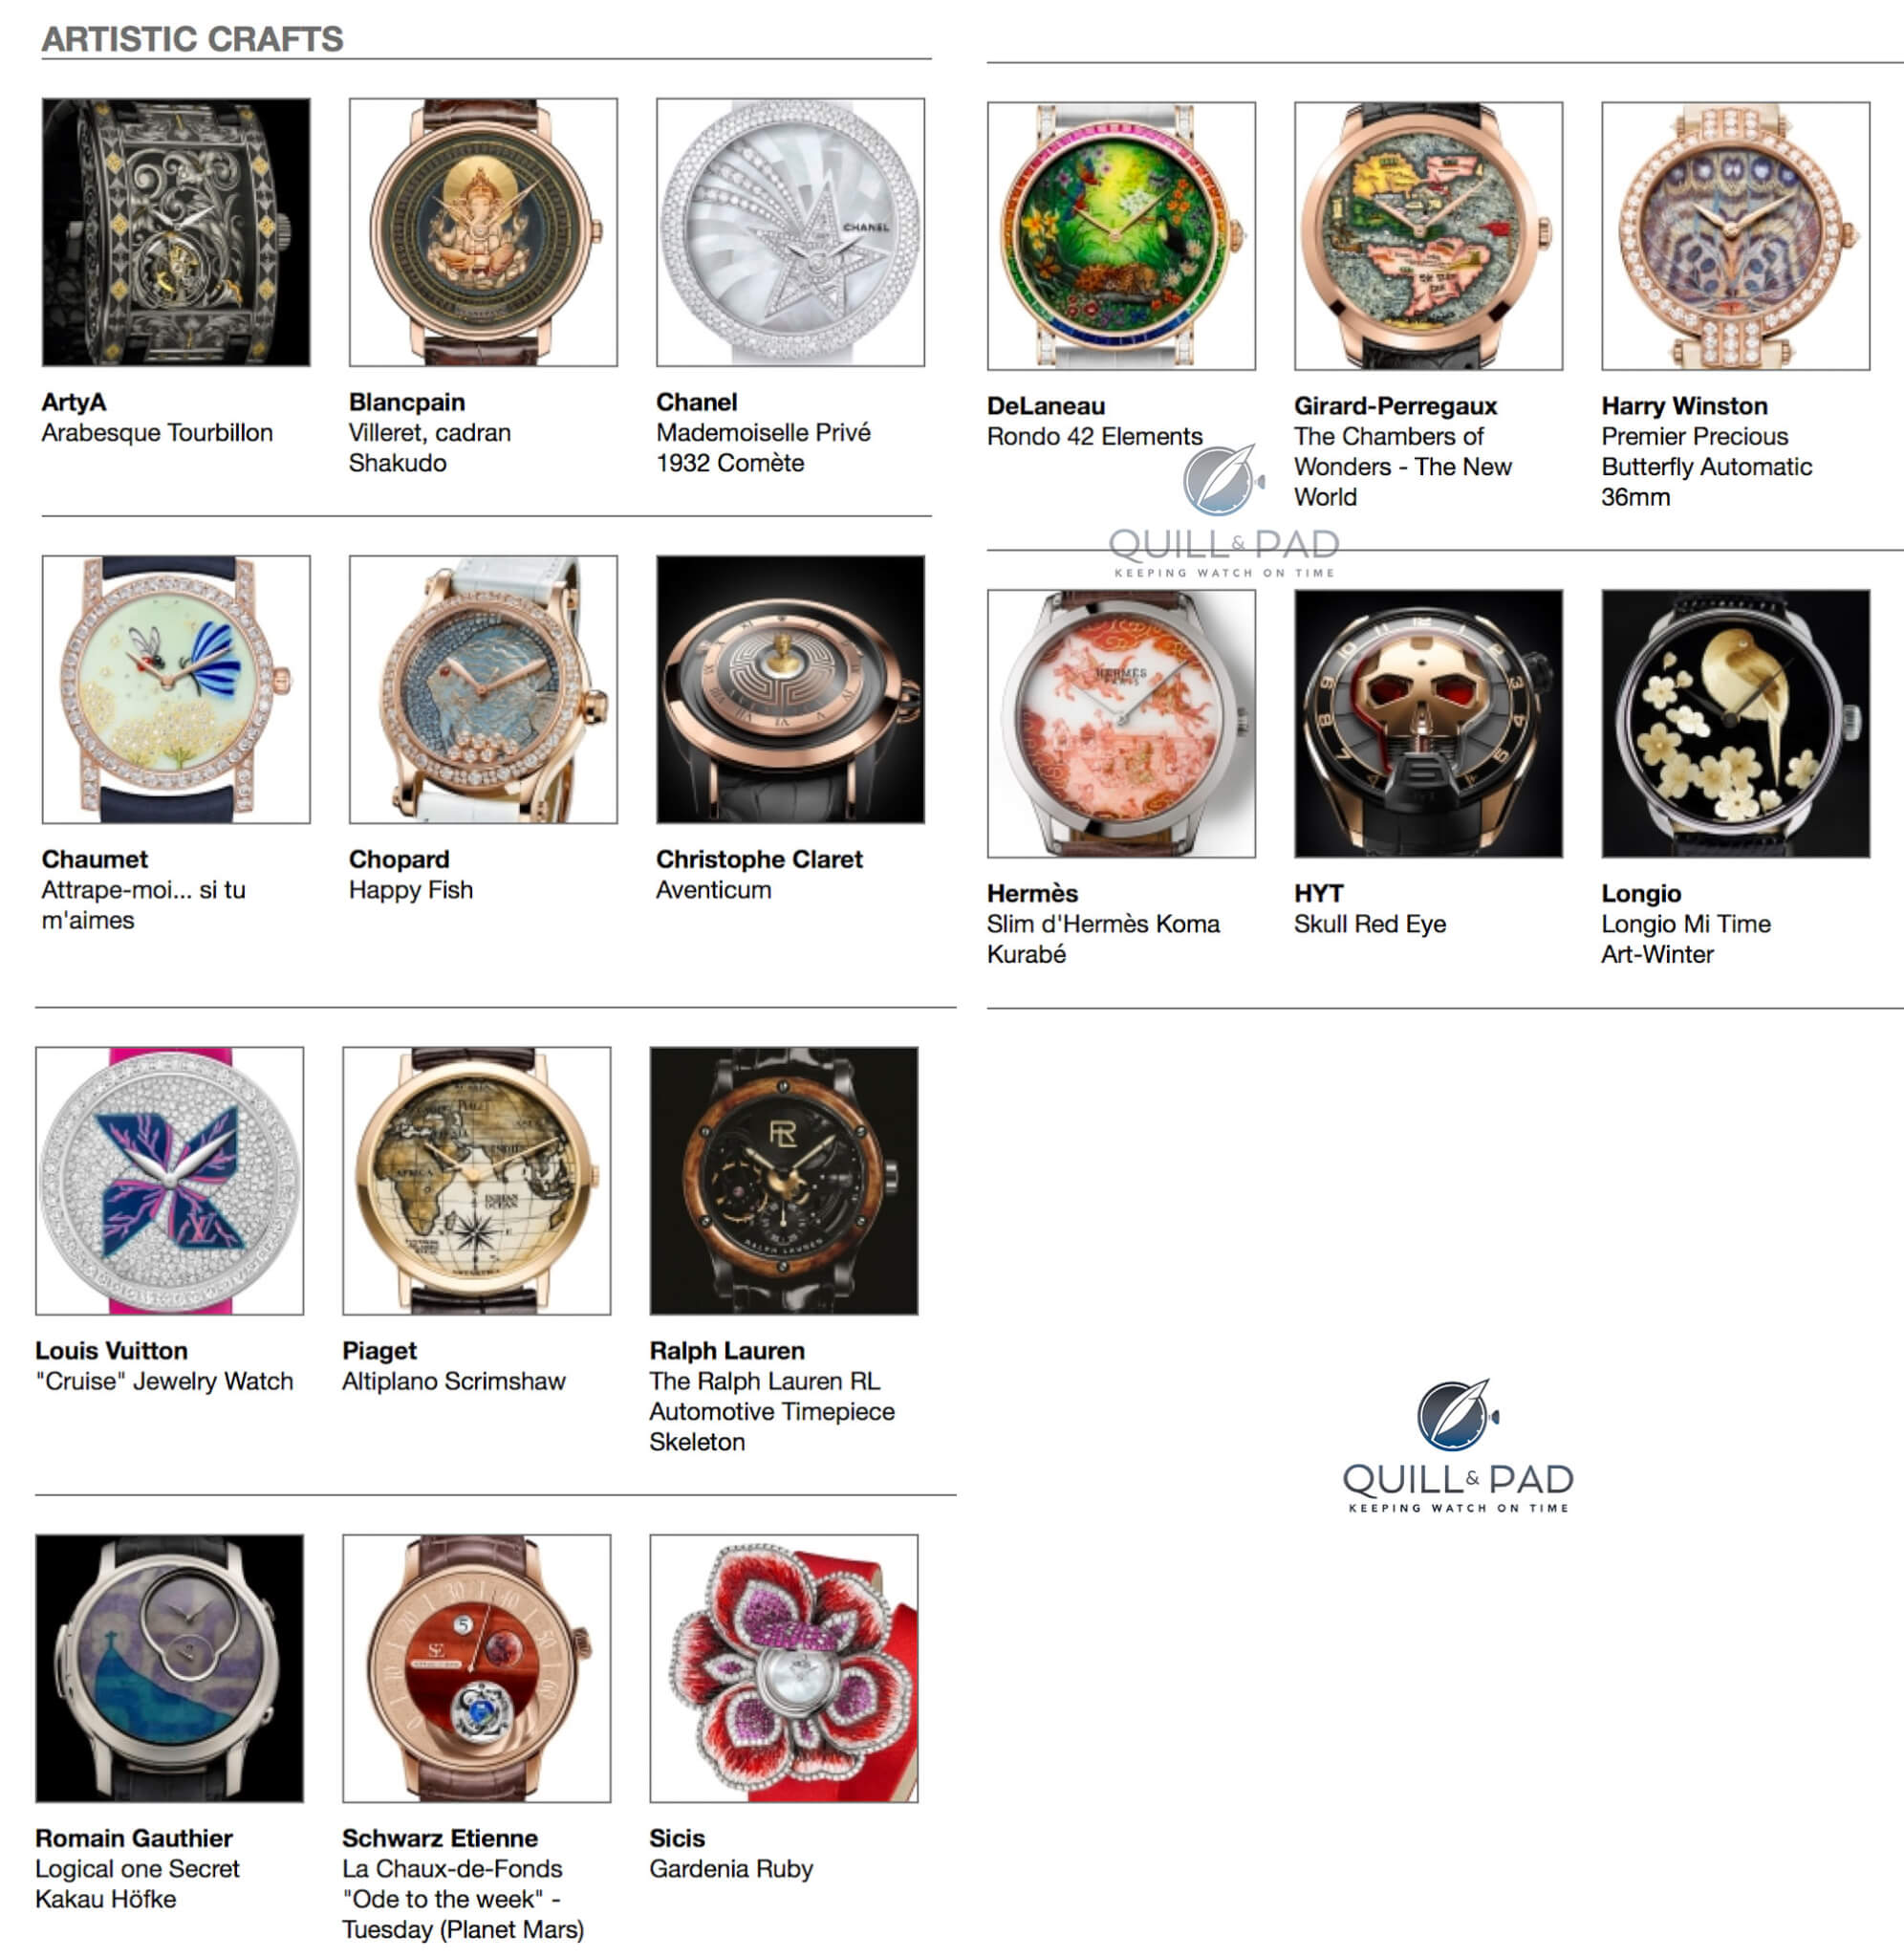 Artistic Crafts watches entered in the 2015 Grand Prix d’Horlogerie de Genève